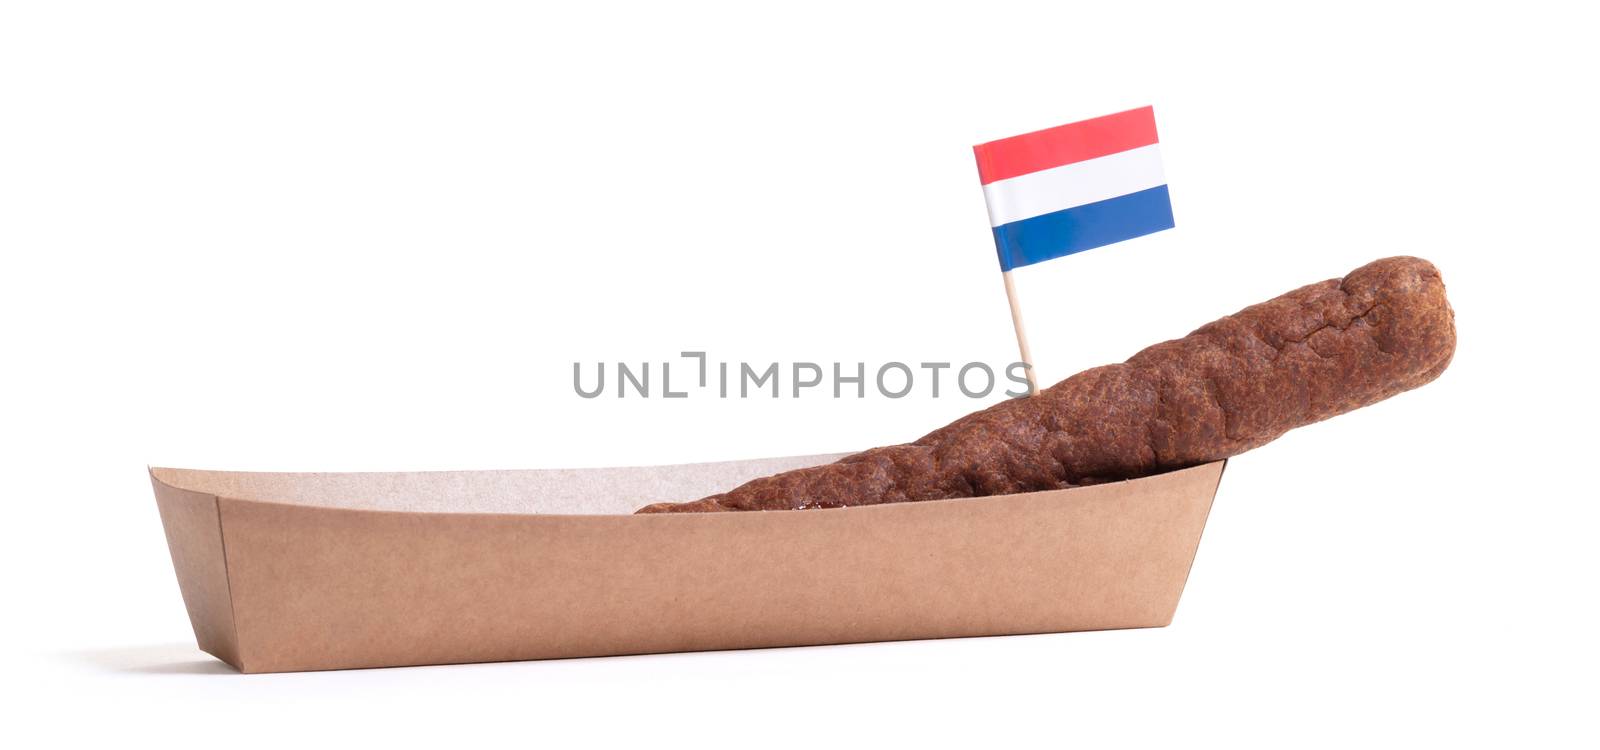 One frikadel, a Dutch fast food snack by michaklootwijk